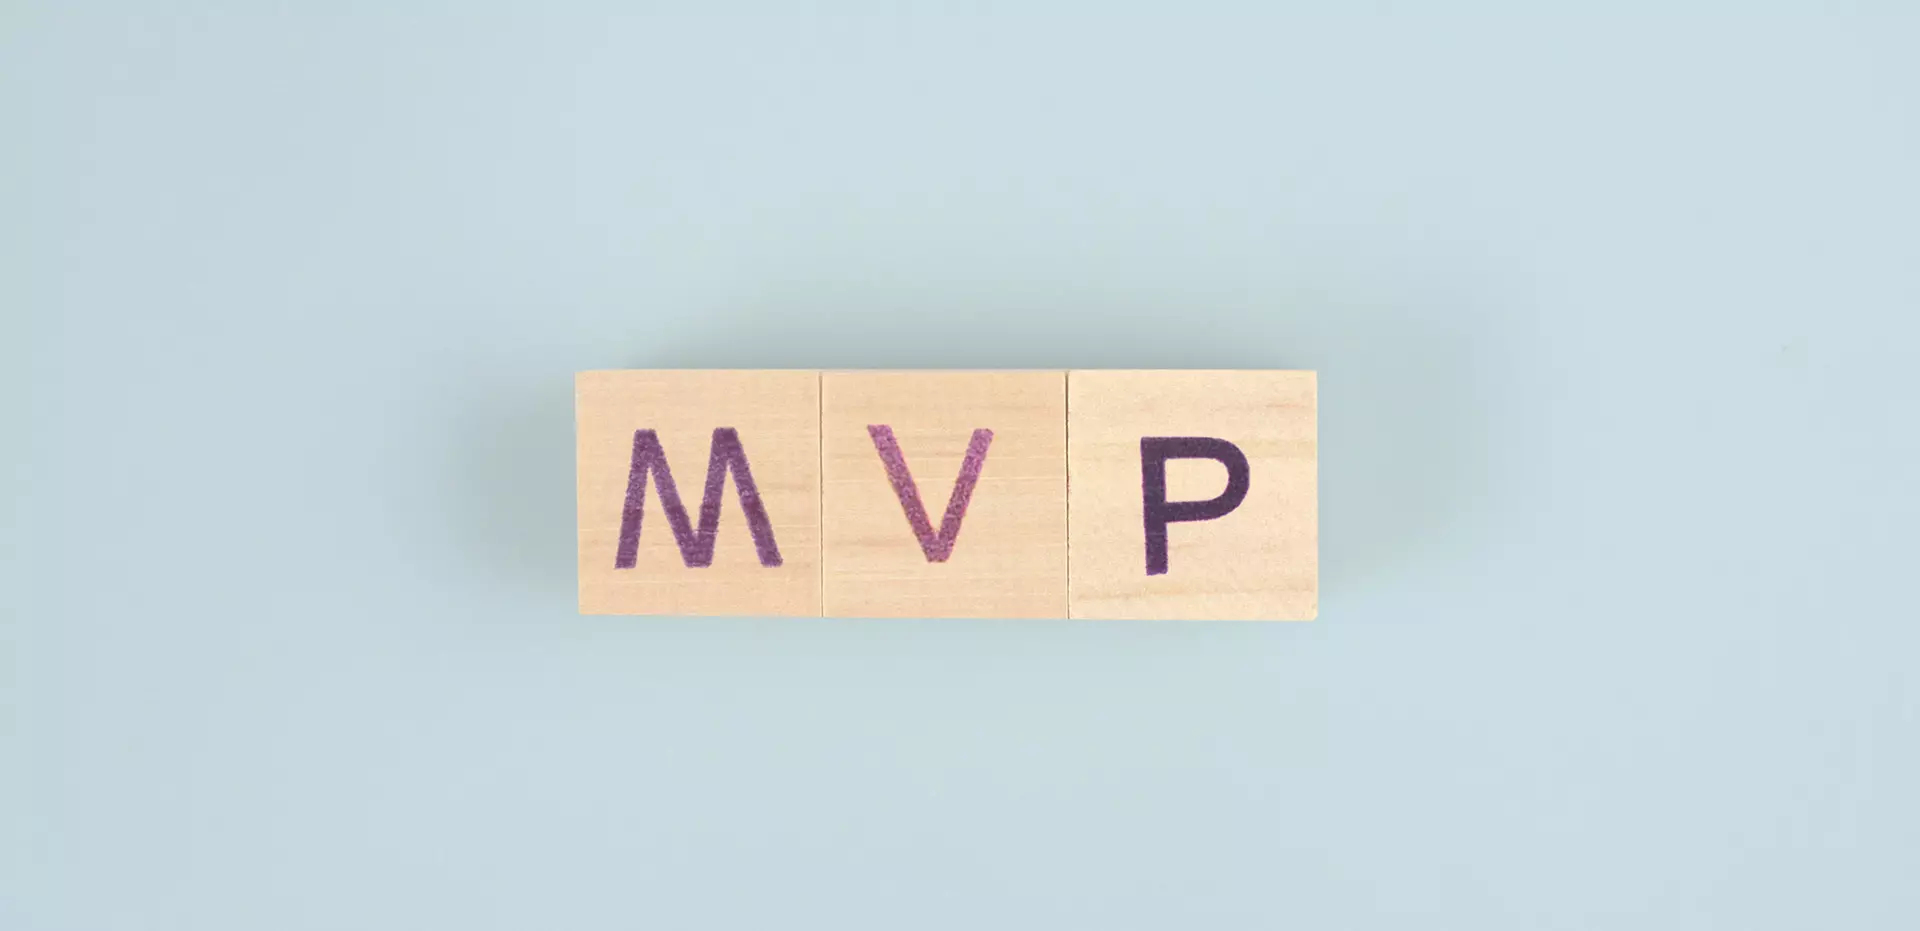 MVP - Minimum Viable Product